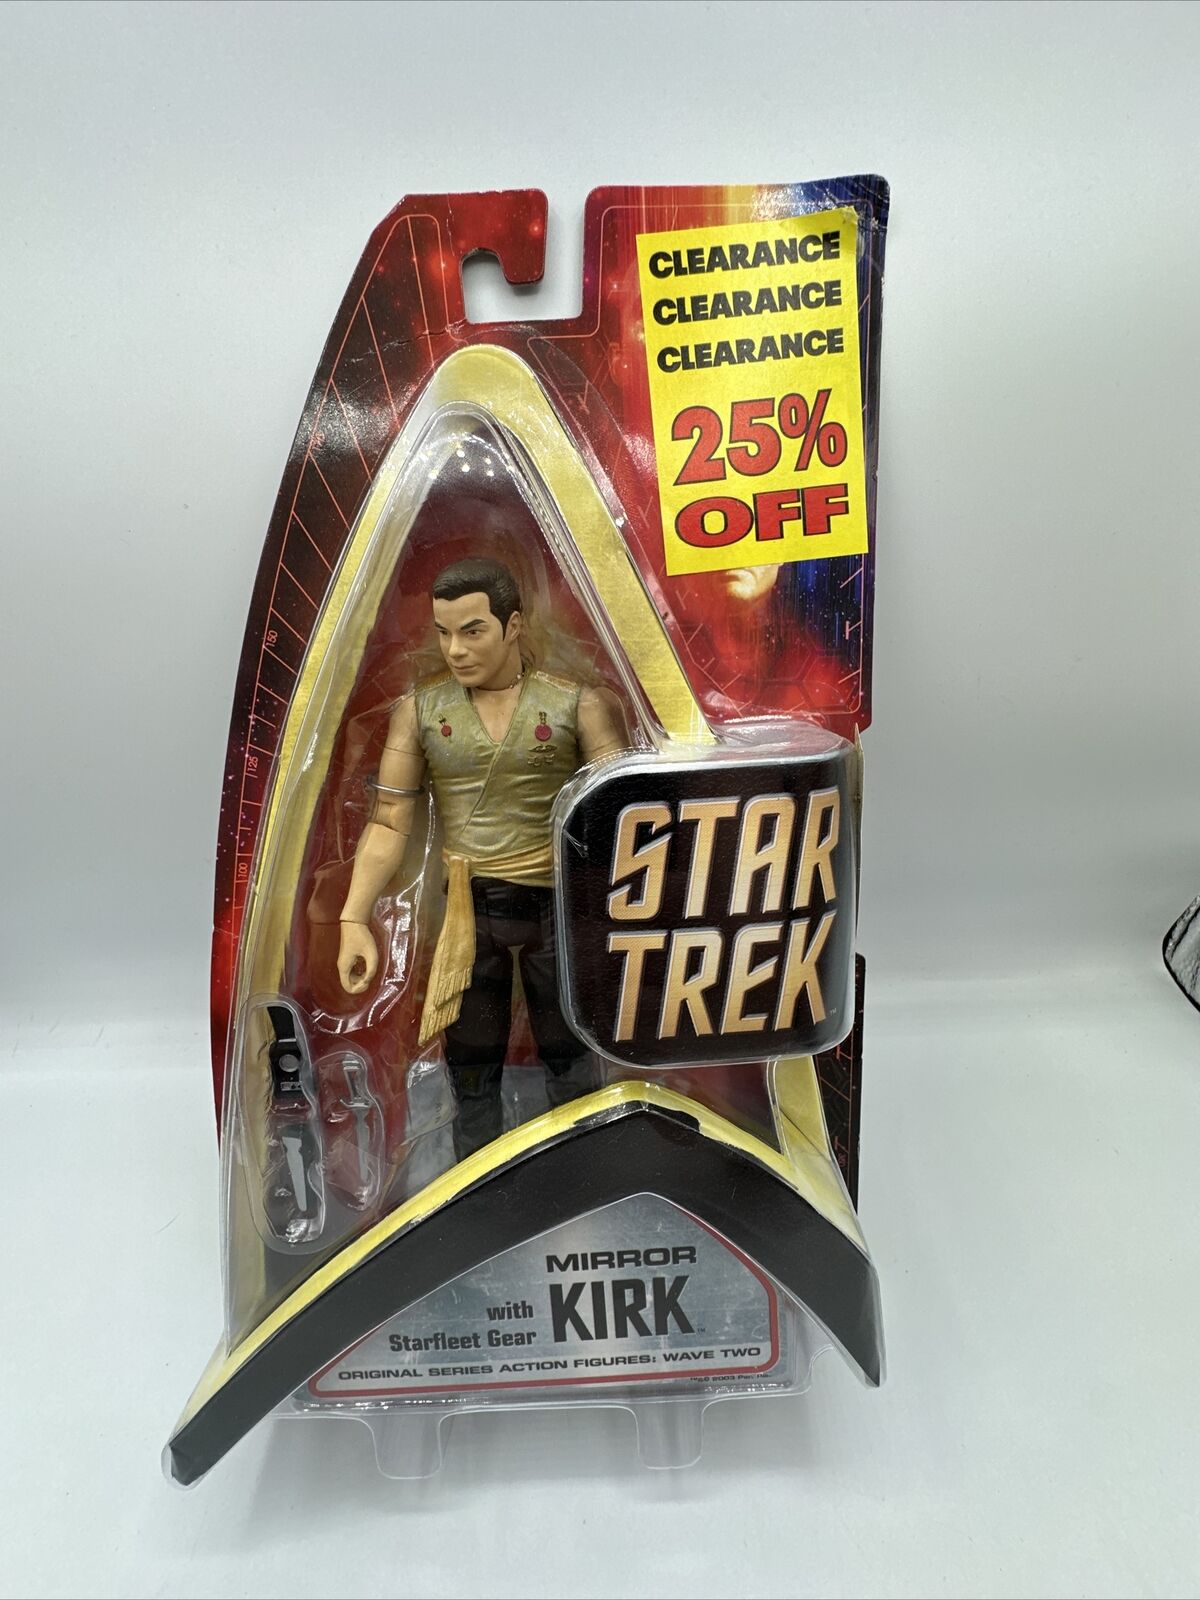 Star Trek Art Asylum Mirror Kirk with Starfleet Gear Original Series 2003